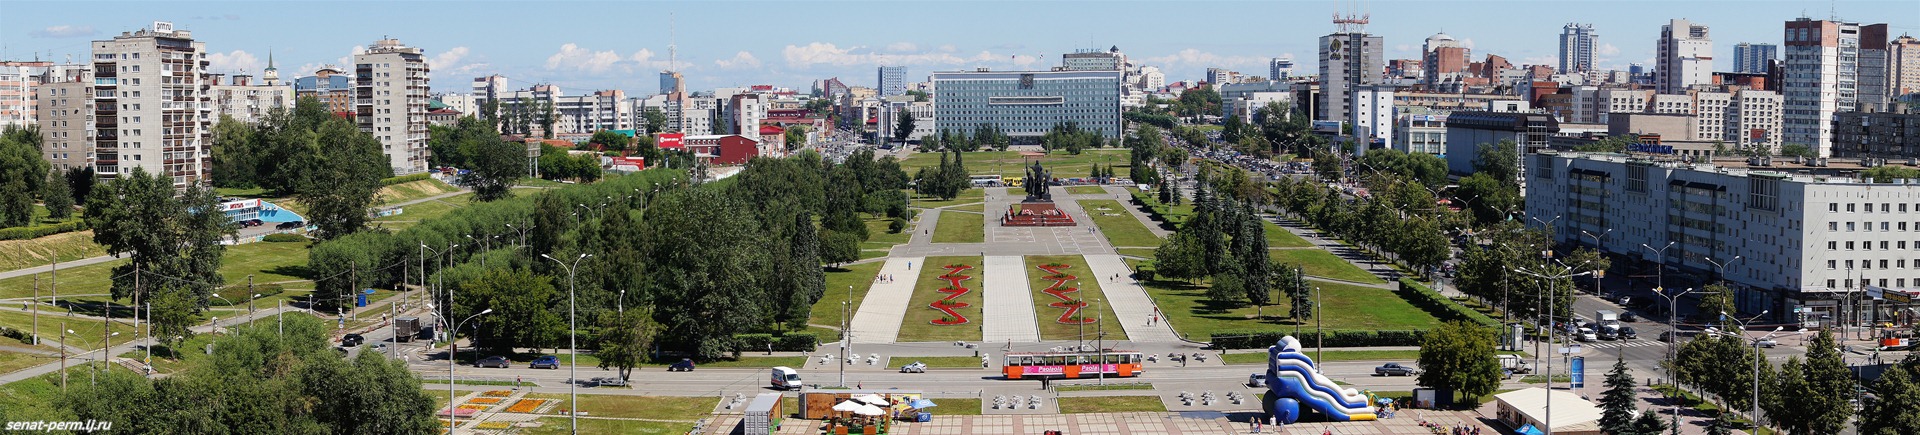 Панорамный вид на центр города | Panoramic view on city's center